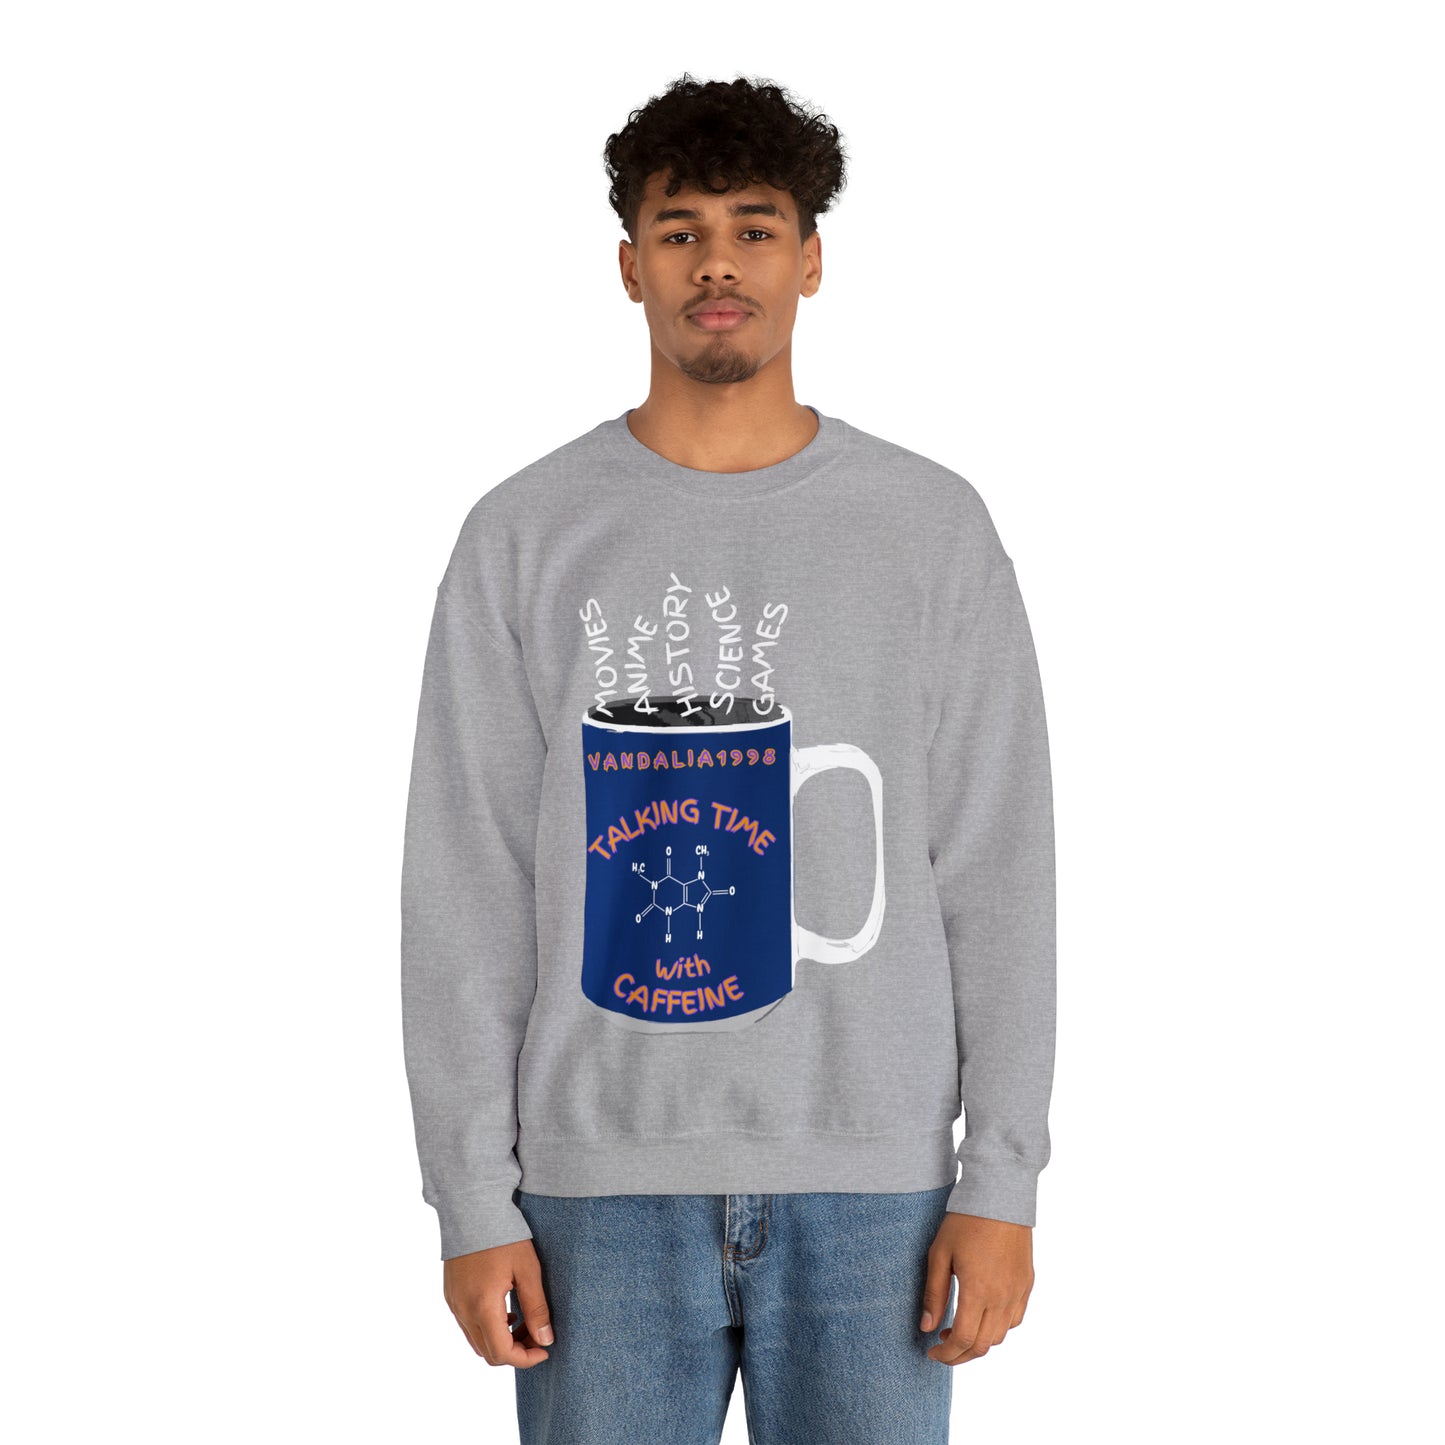 Talking Time With Caffeine Unisex Heavy Blend™ Crewneck Sweatshirt